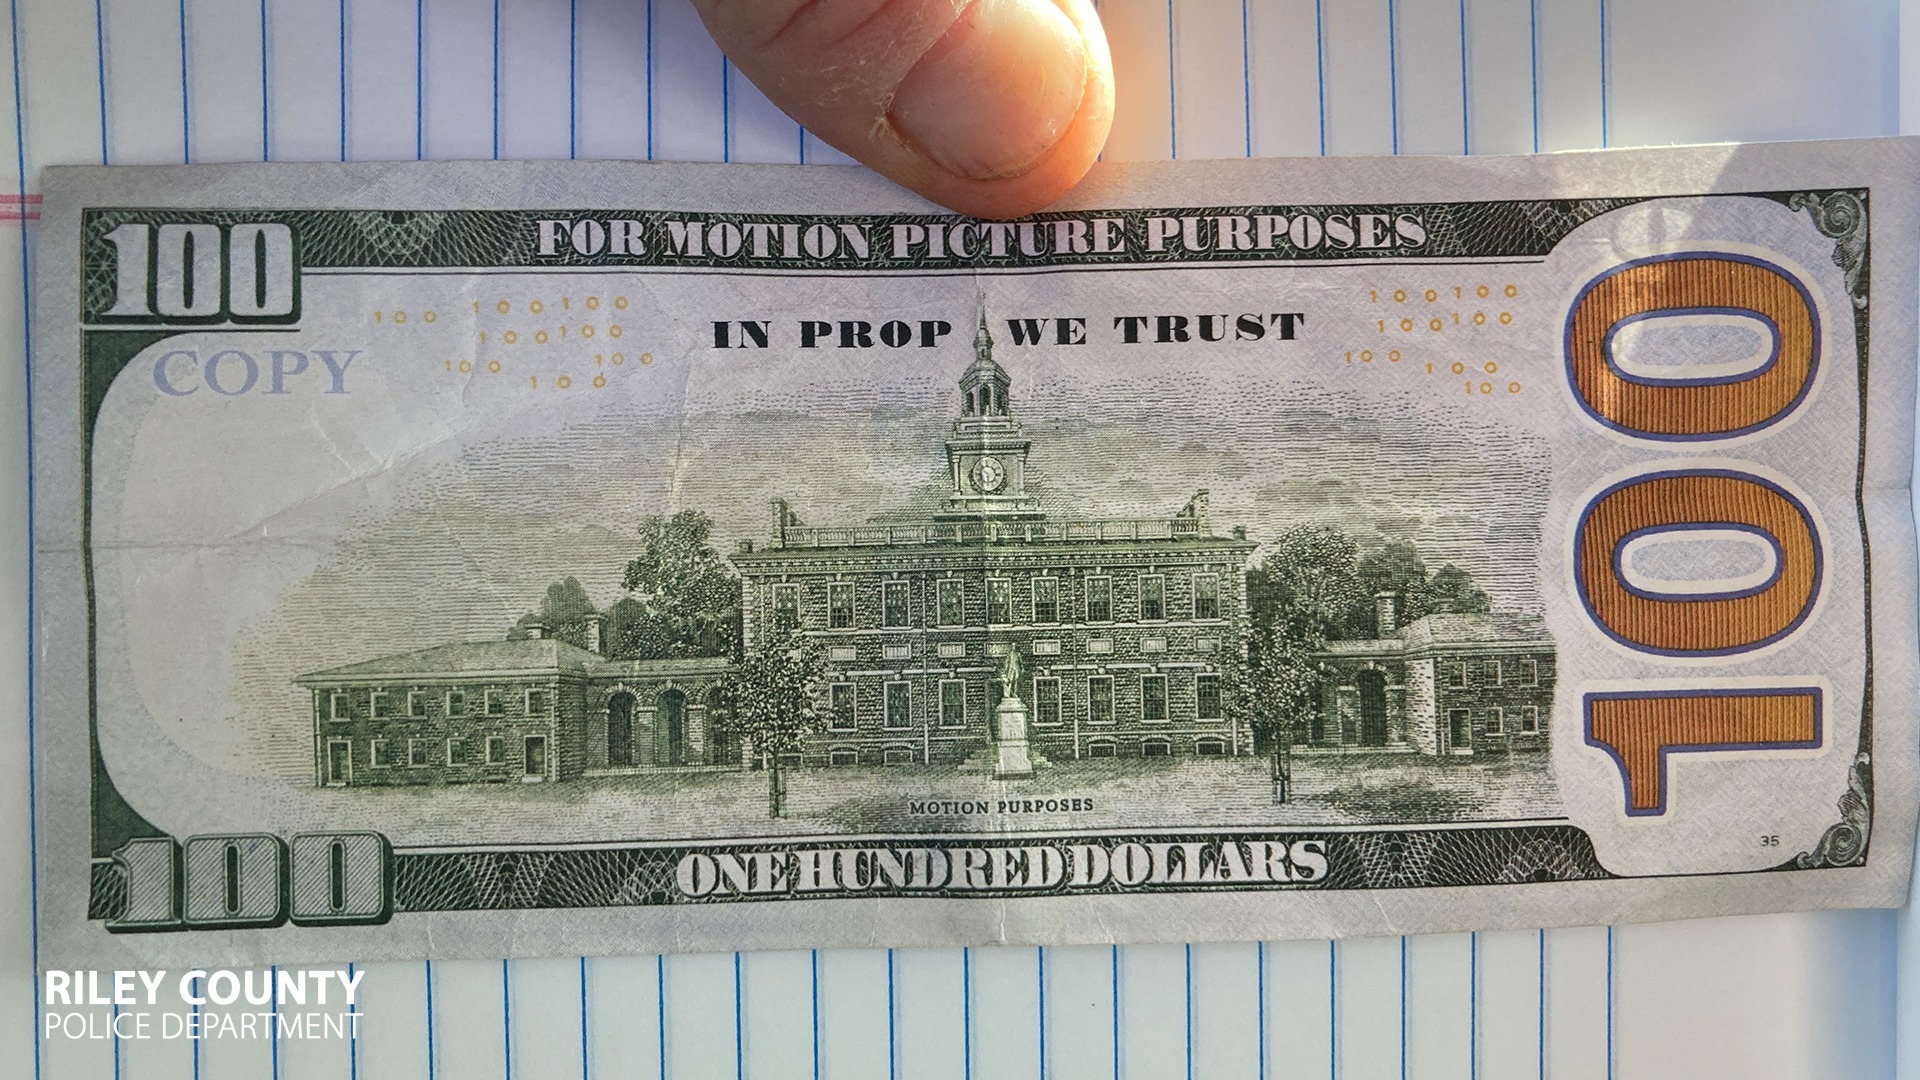 Fake movie money now circulating in Chickamauga area - WDEF